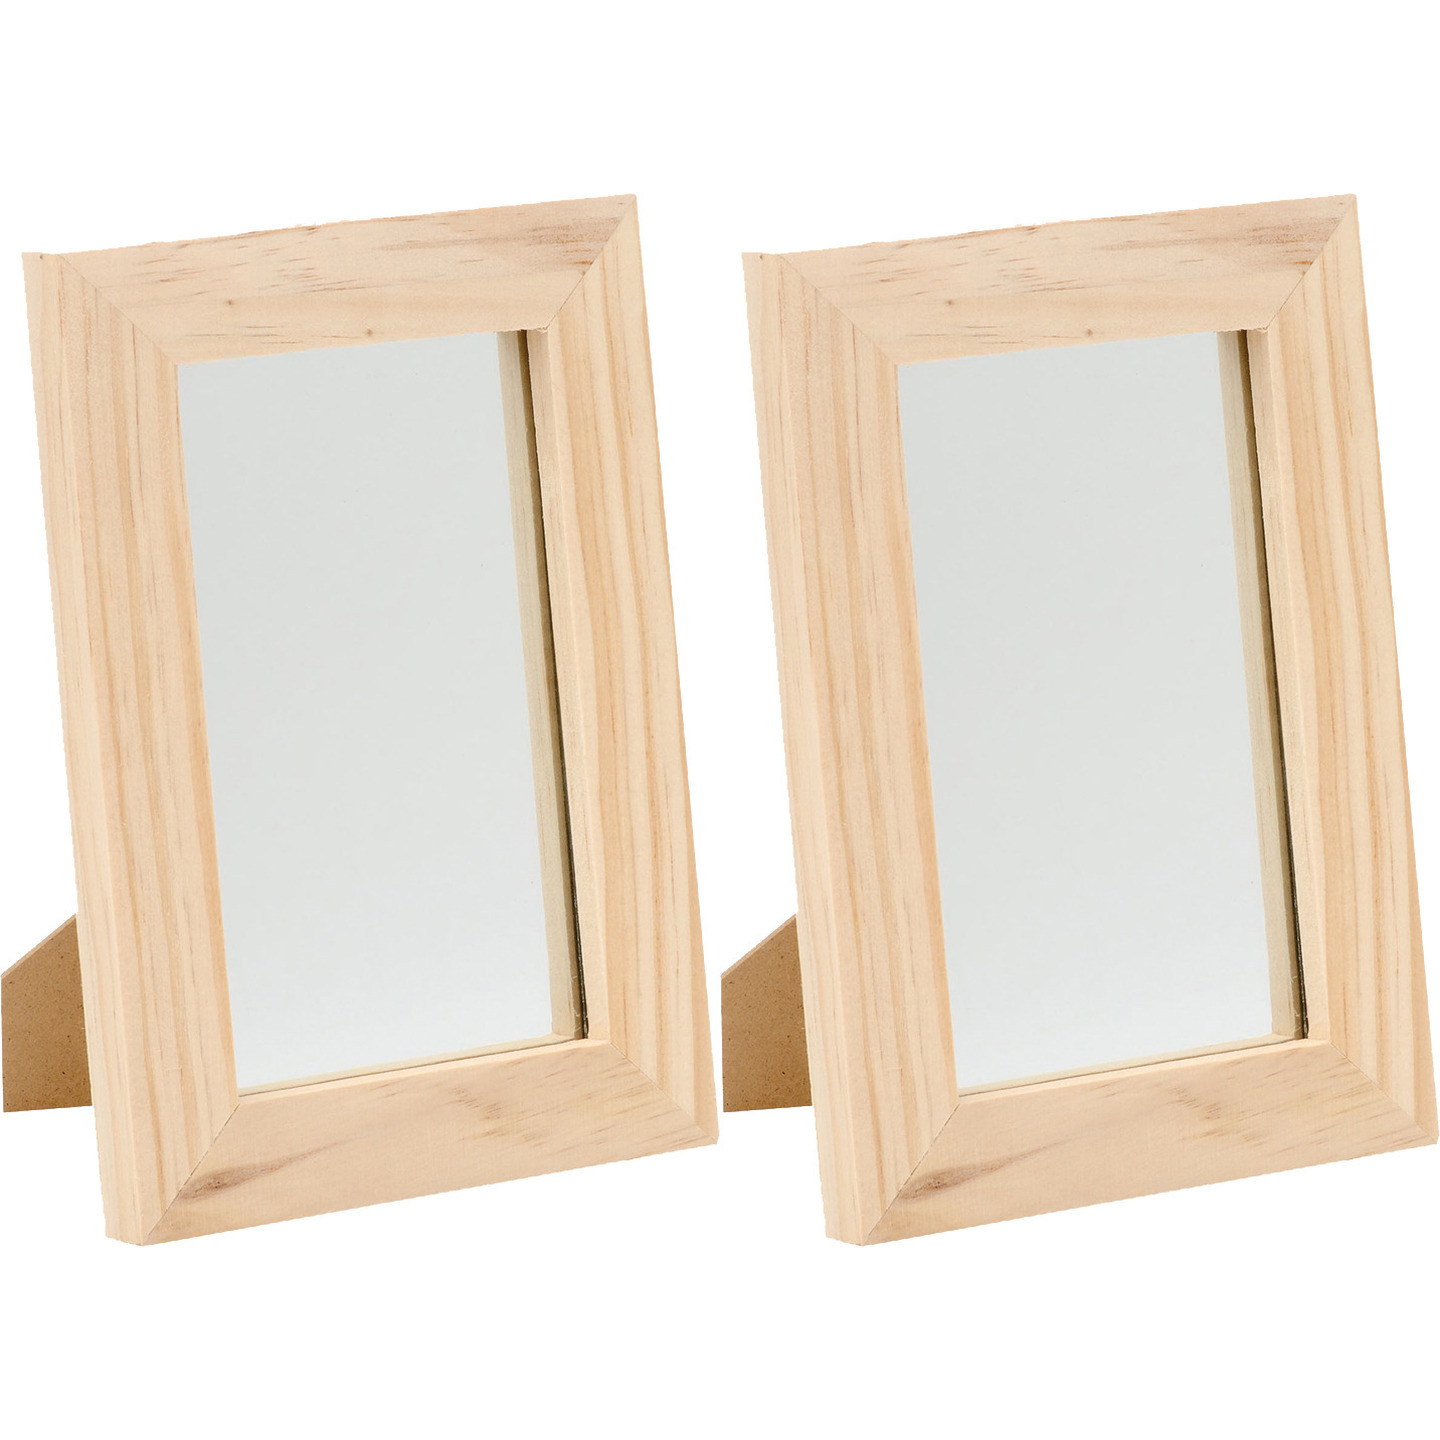 2x Houten spiegels 13,5 x 19,5 cm DIY hobby-knutselmateriaal